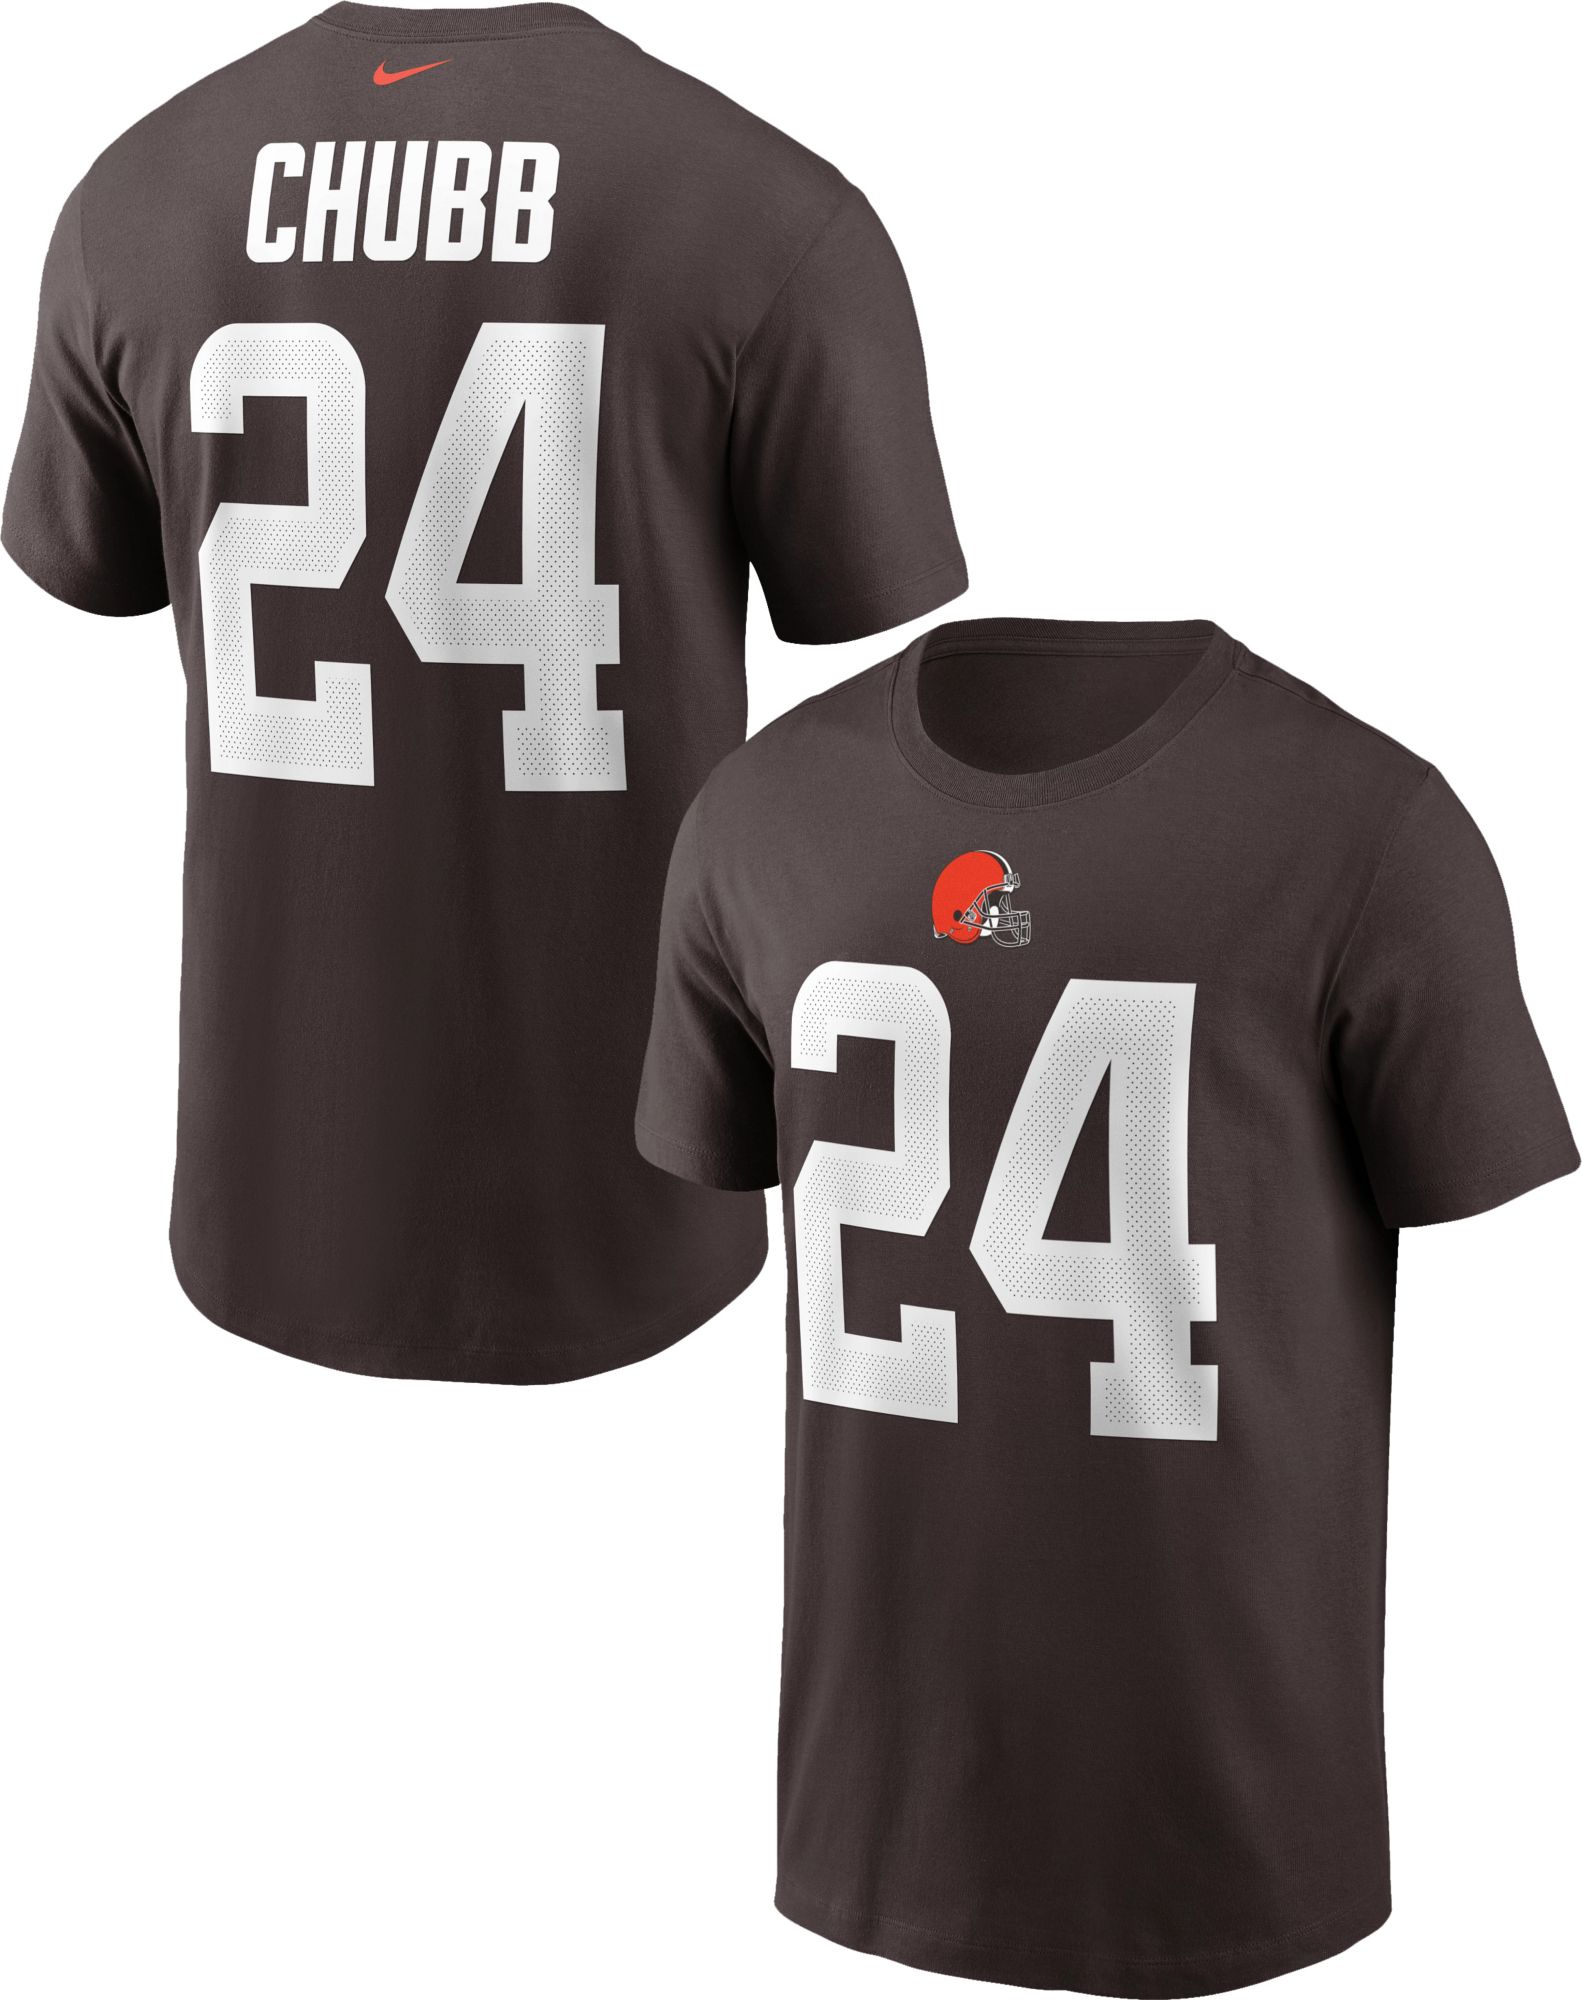 chubb cleveland browns jersey